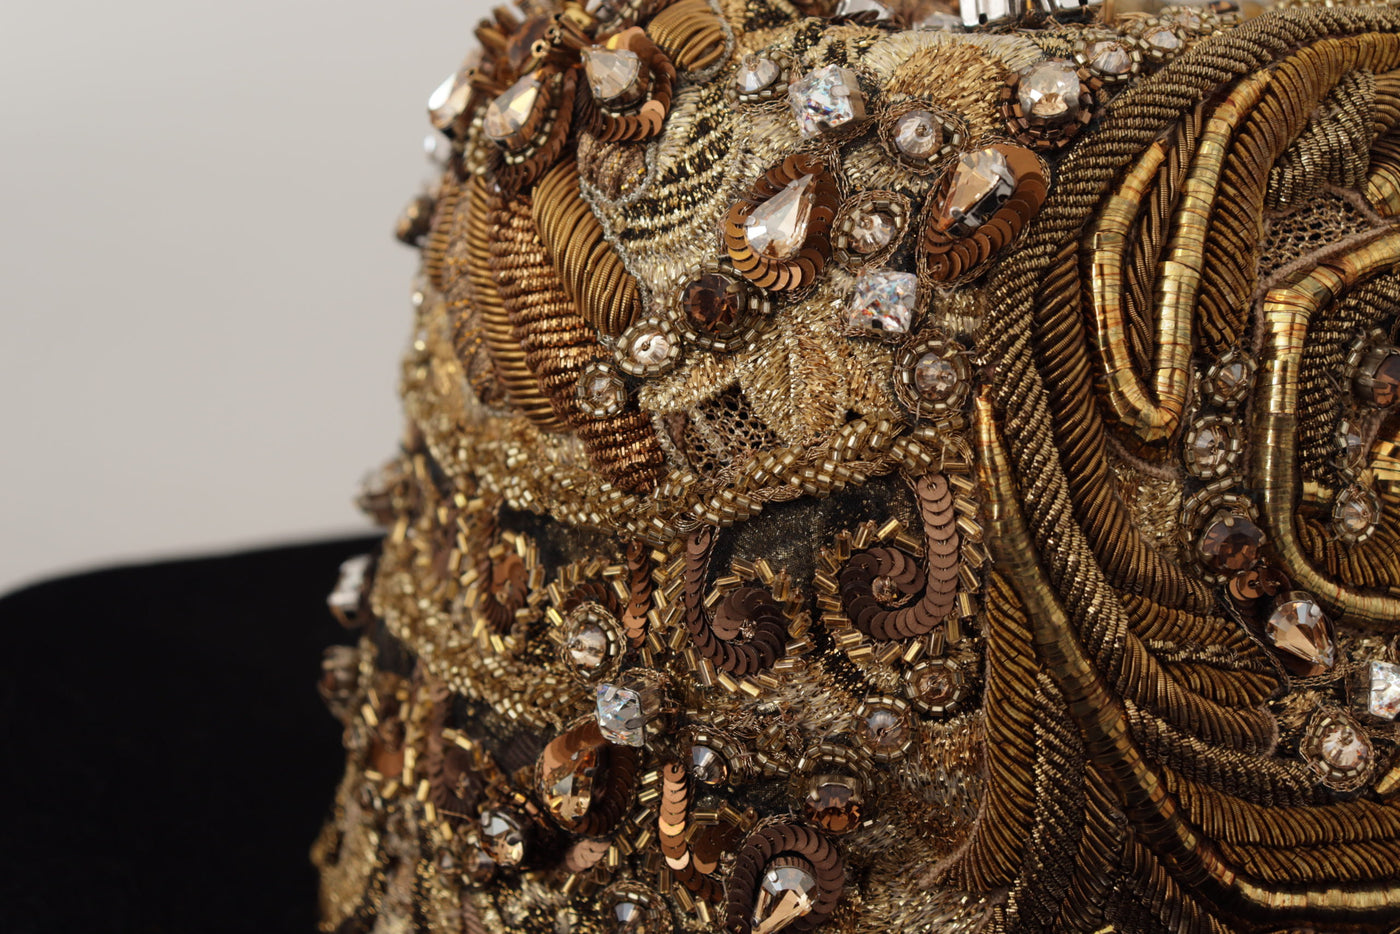 Dolce & Gabbana Gold Embellished Crystal Rhinestone Embroidered Fedora Hat